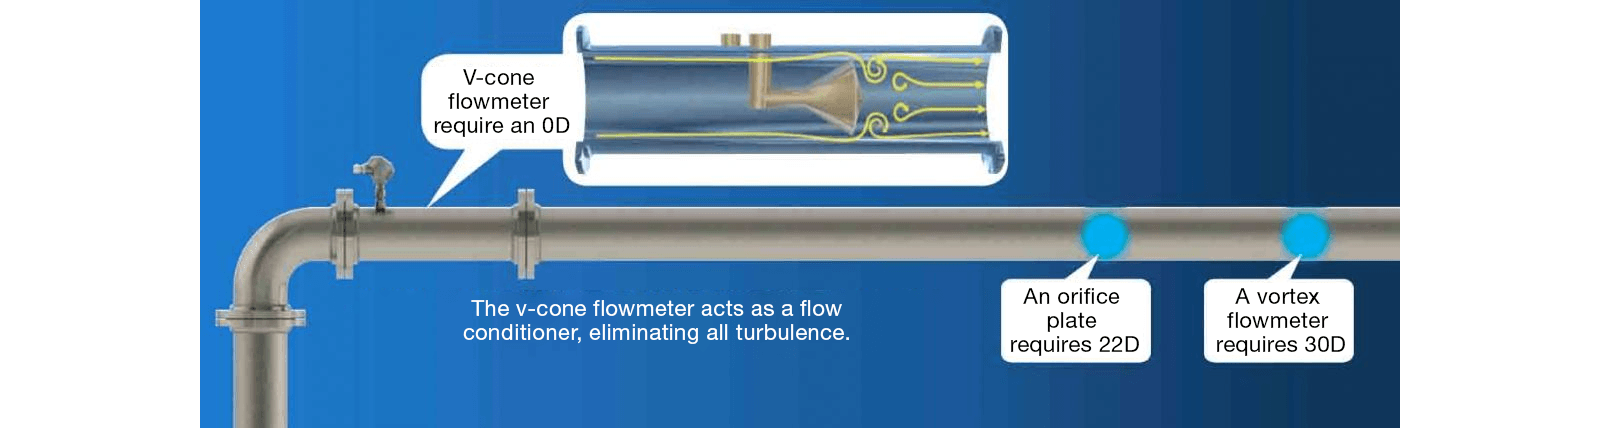 Unique steam flow measurement design